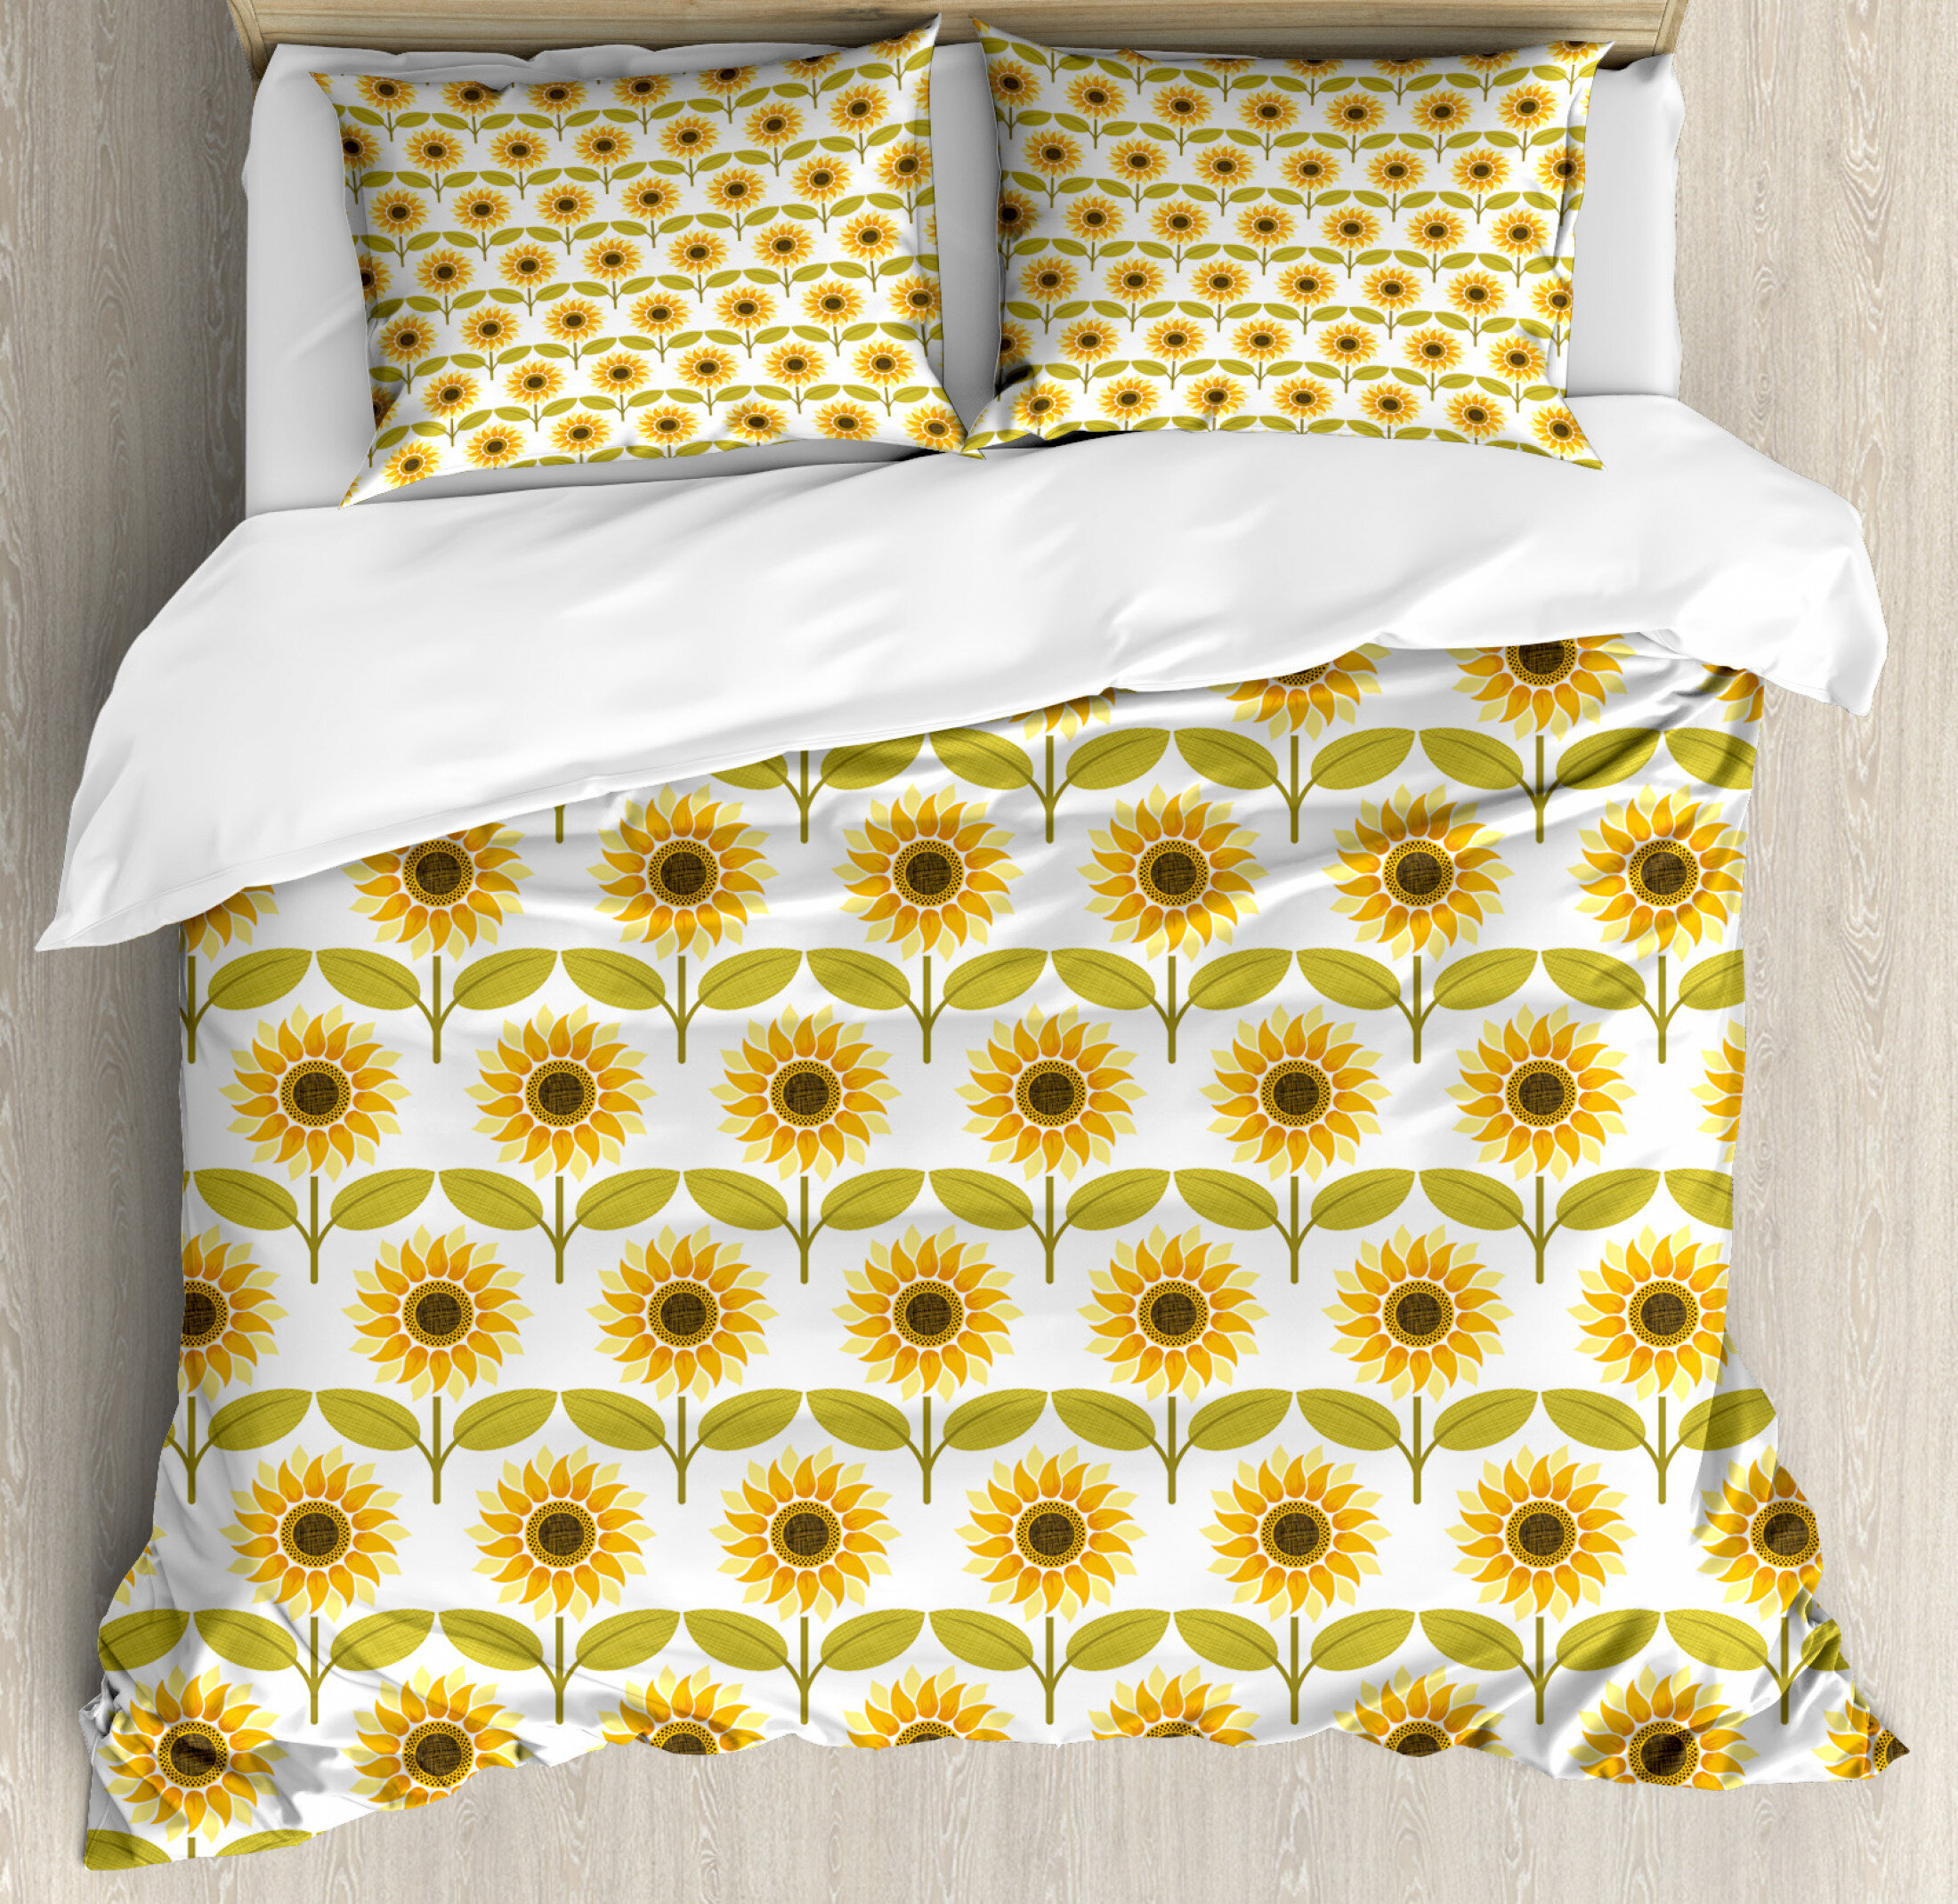 East Urban Home Sunflower Duvet Cover Set Wayfair